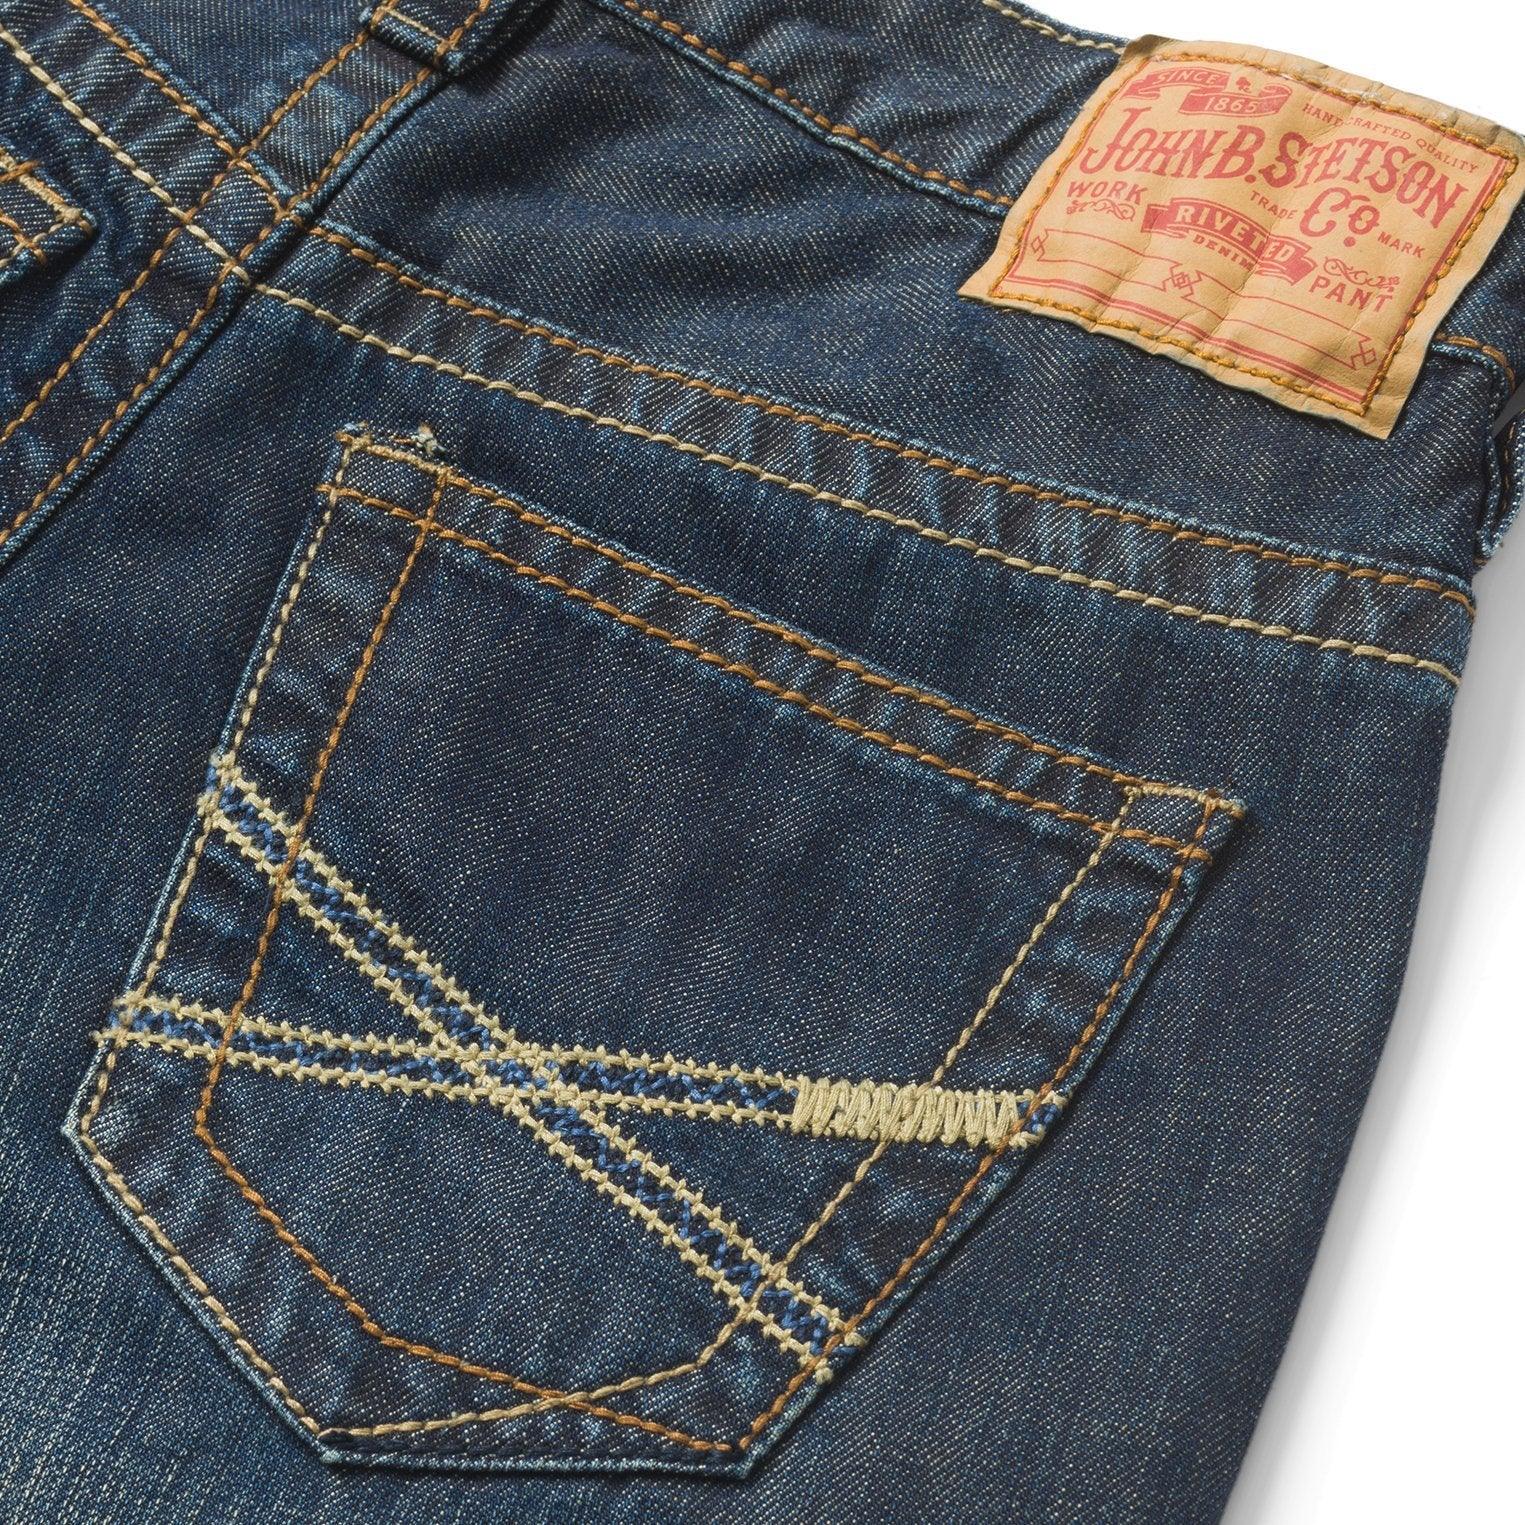 Stetson 1312 Fit Dark Blue Wash Jeans - Flyclothing LLC